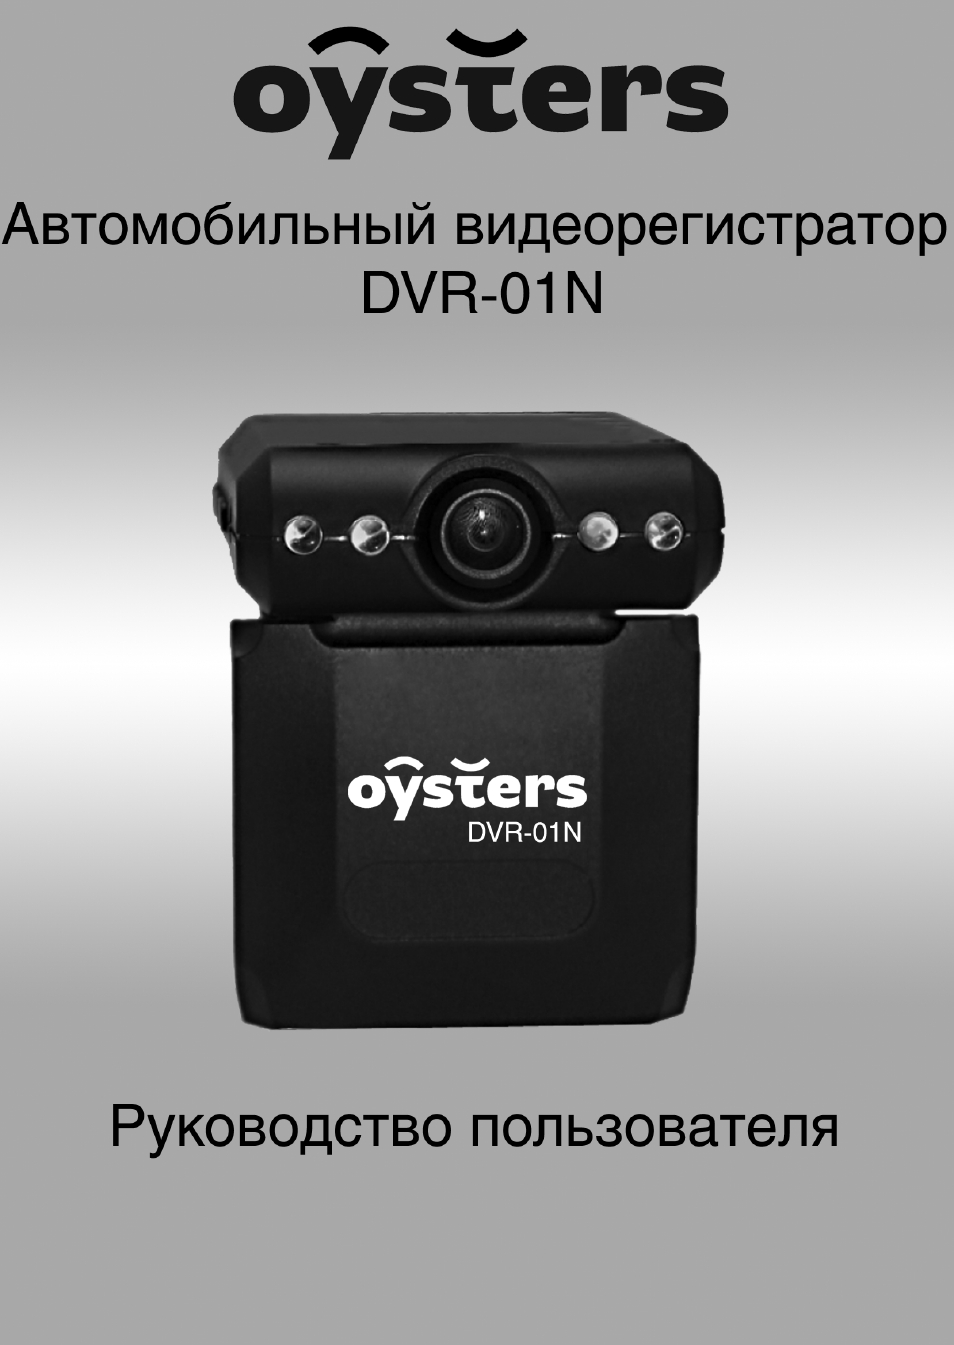 Oysters dvr 01 инструкция